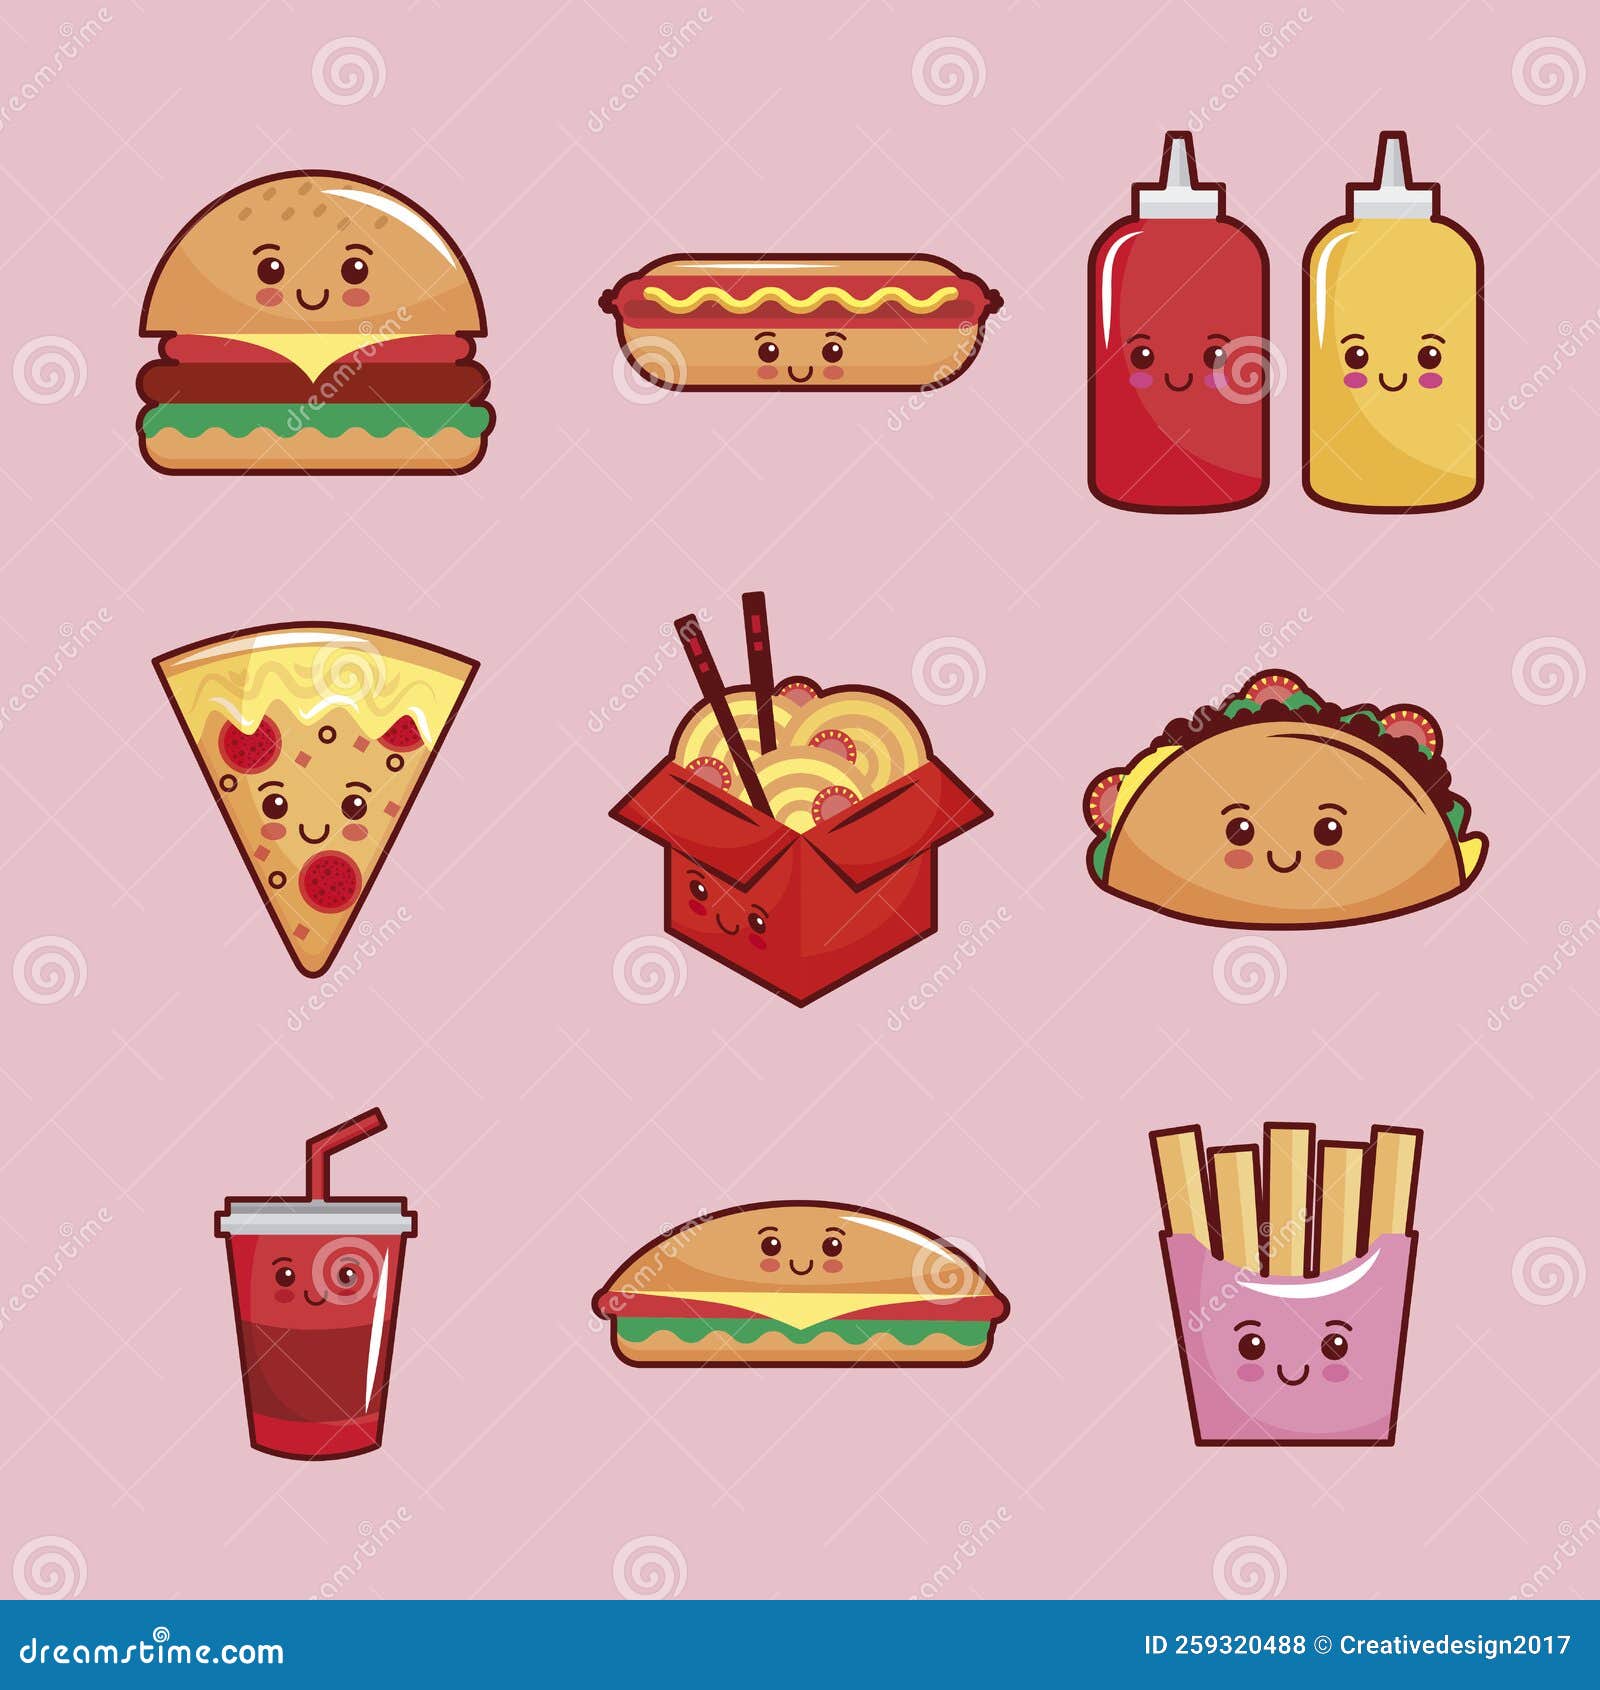 Food kawaii set stock illustration. Illustration of drawn - 259320488